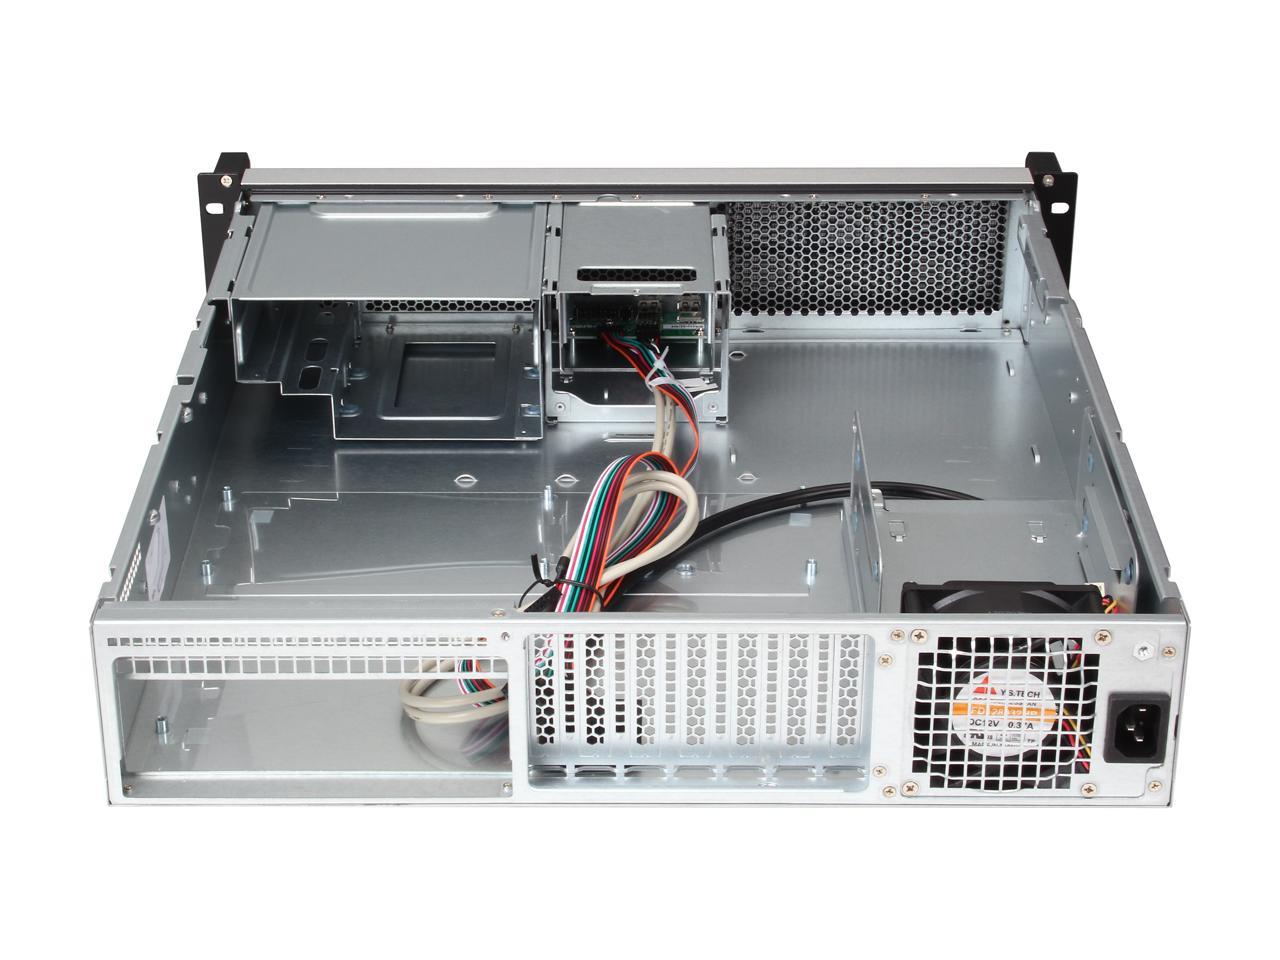 Chenbro Rm24100-L2 1.0Mm Sgcc 2U Rackmount Advanced Industrial Server Case 1 External 5.25" Drive Bays